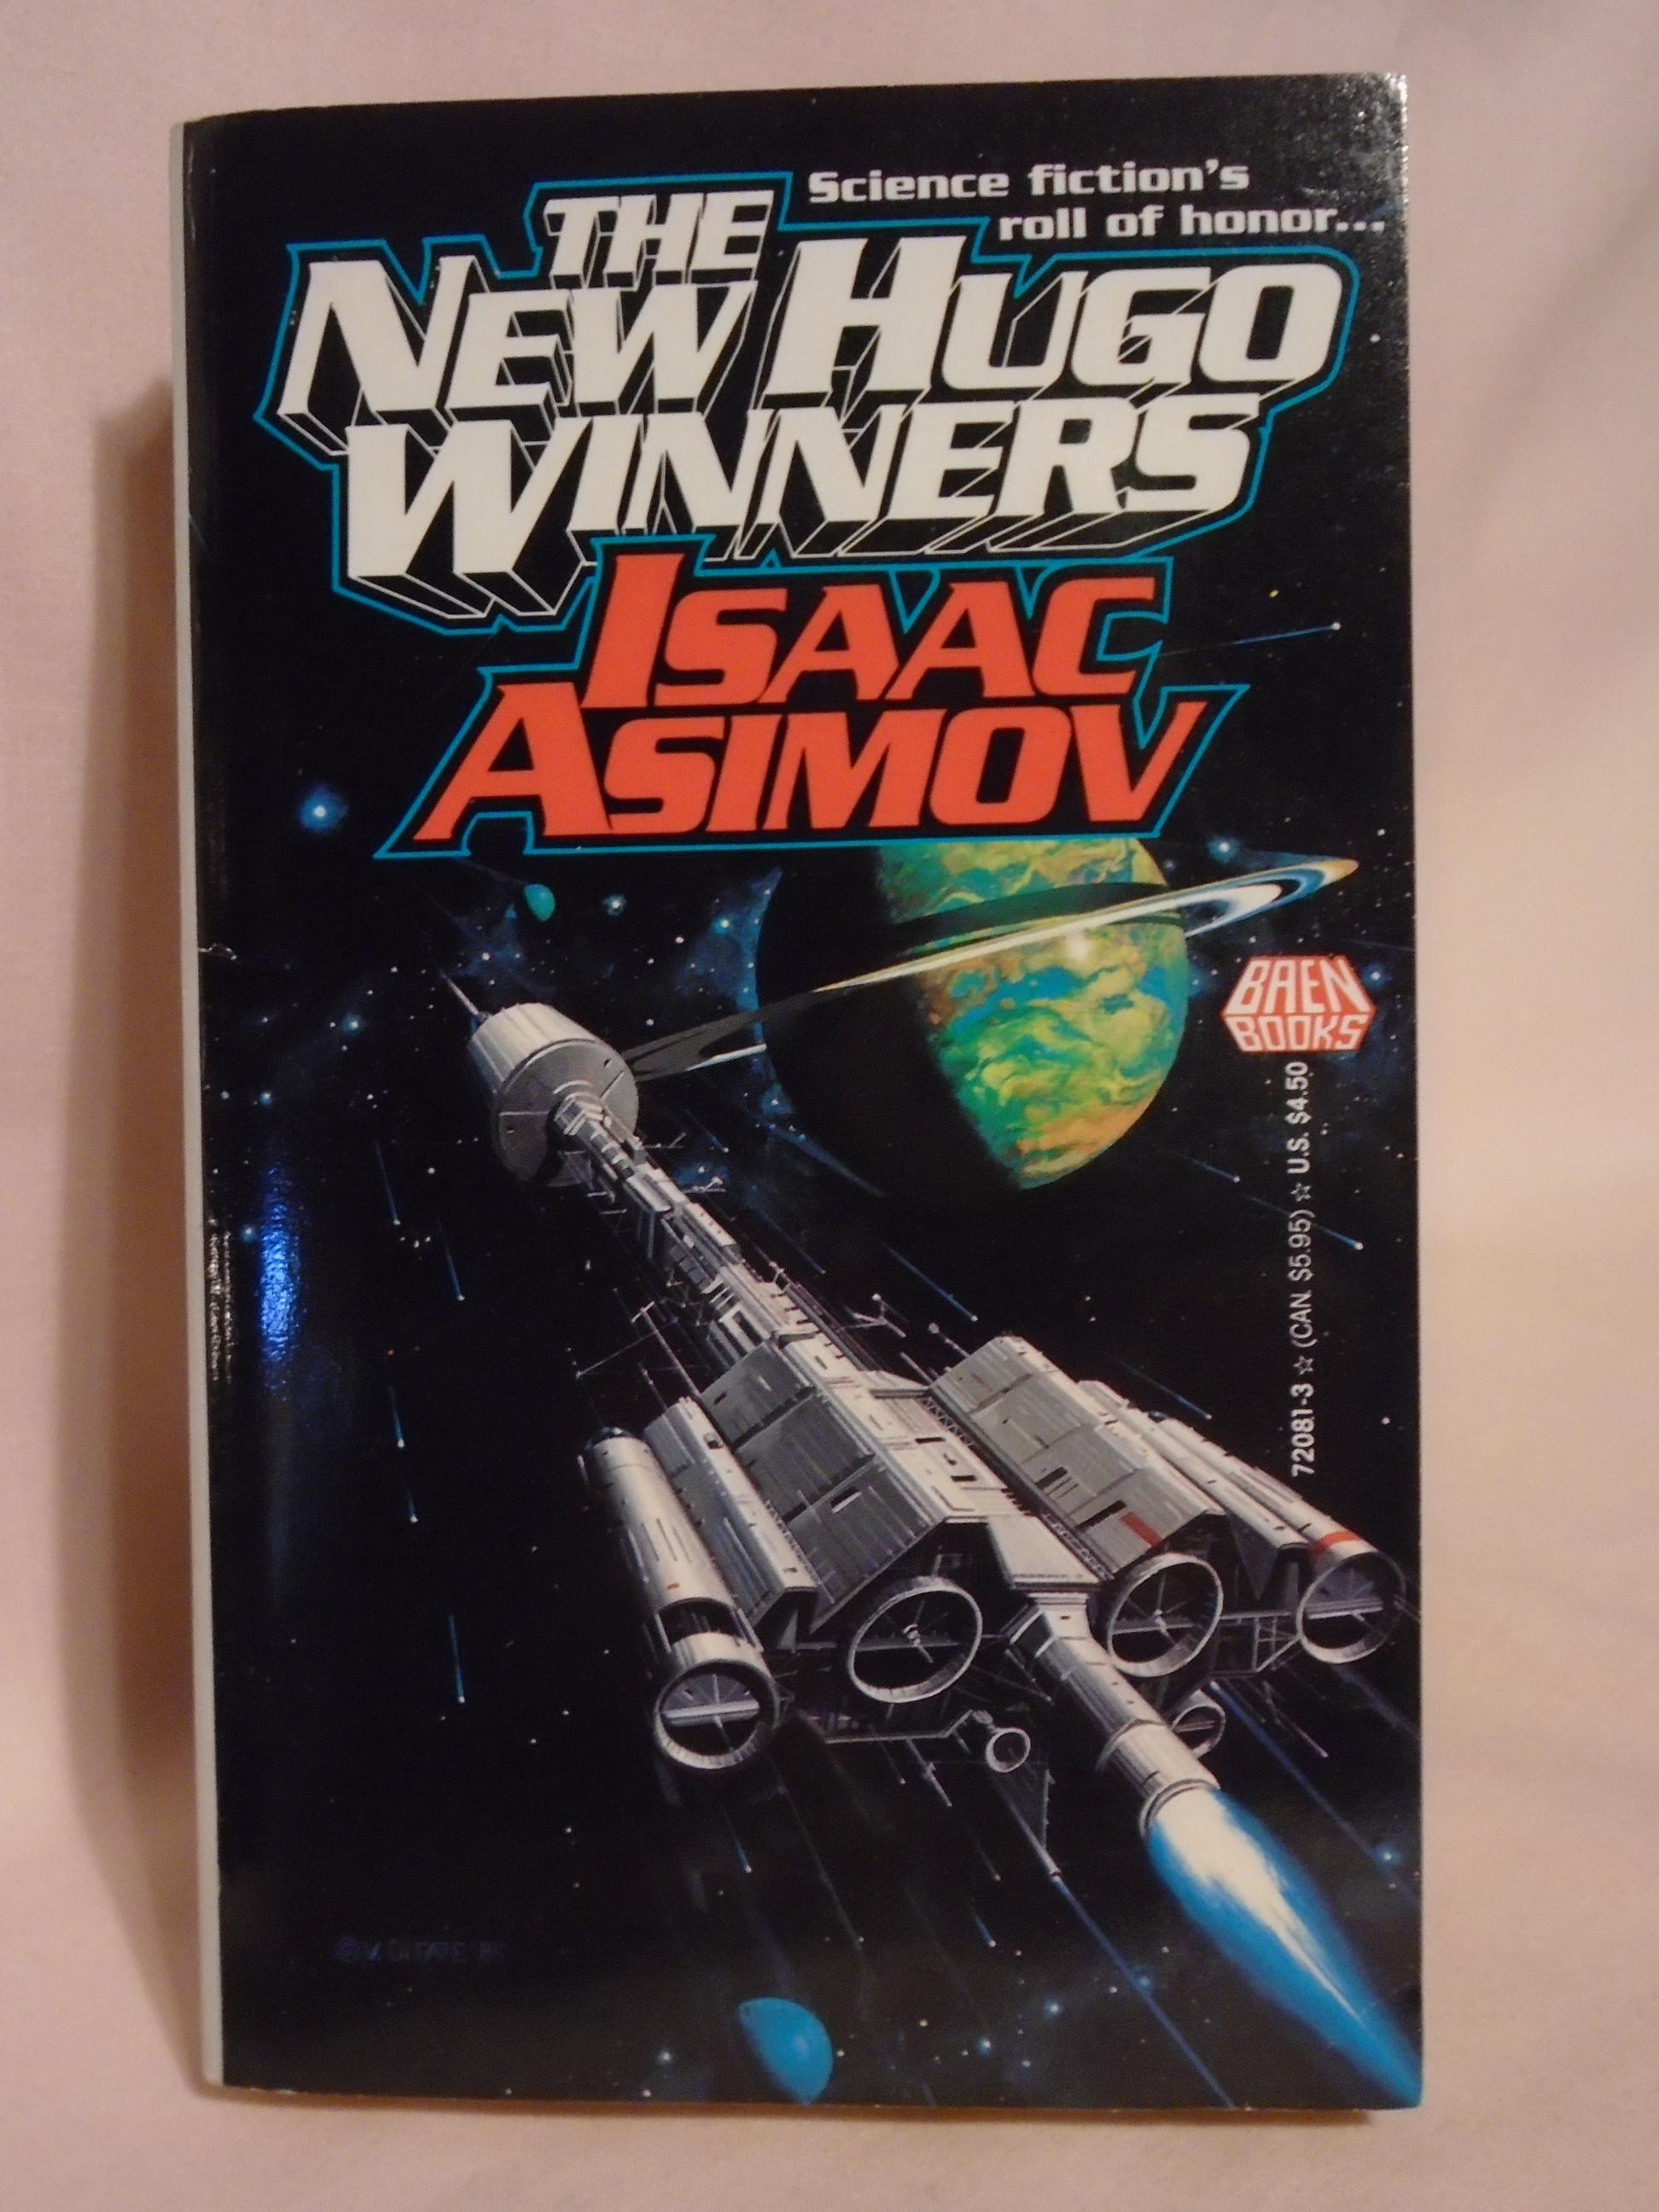 THE NEW HUGO WINNERS - Asimov, Isaac, presented by